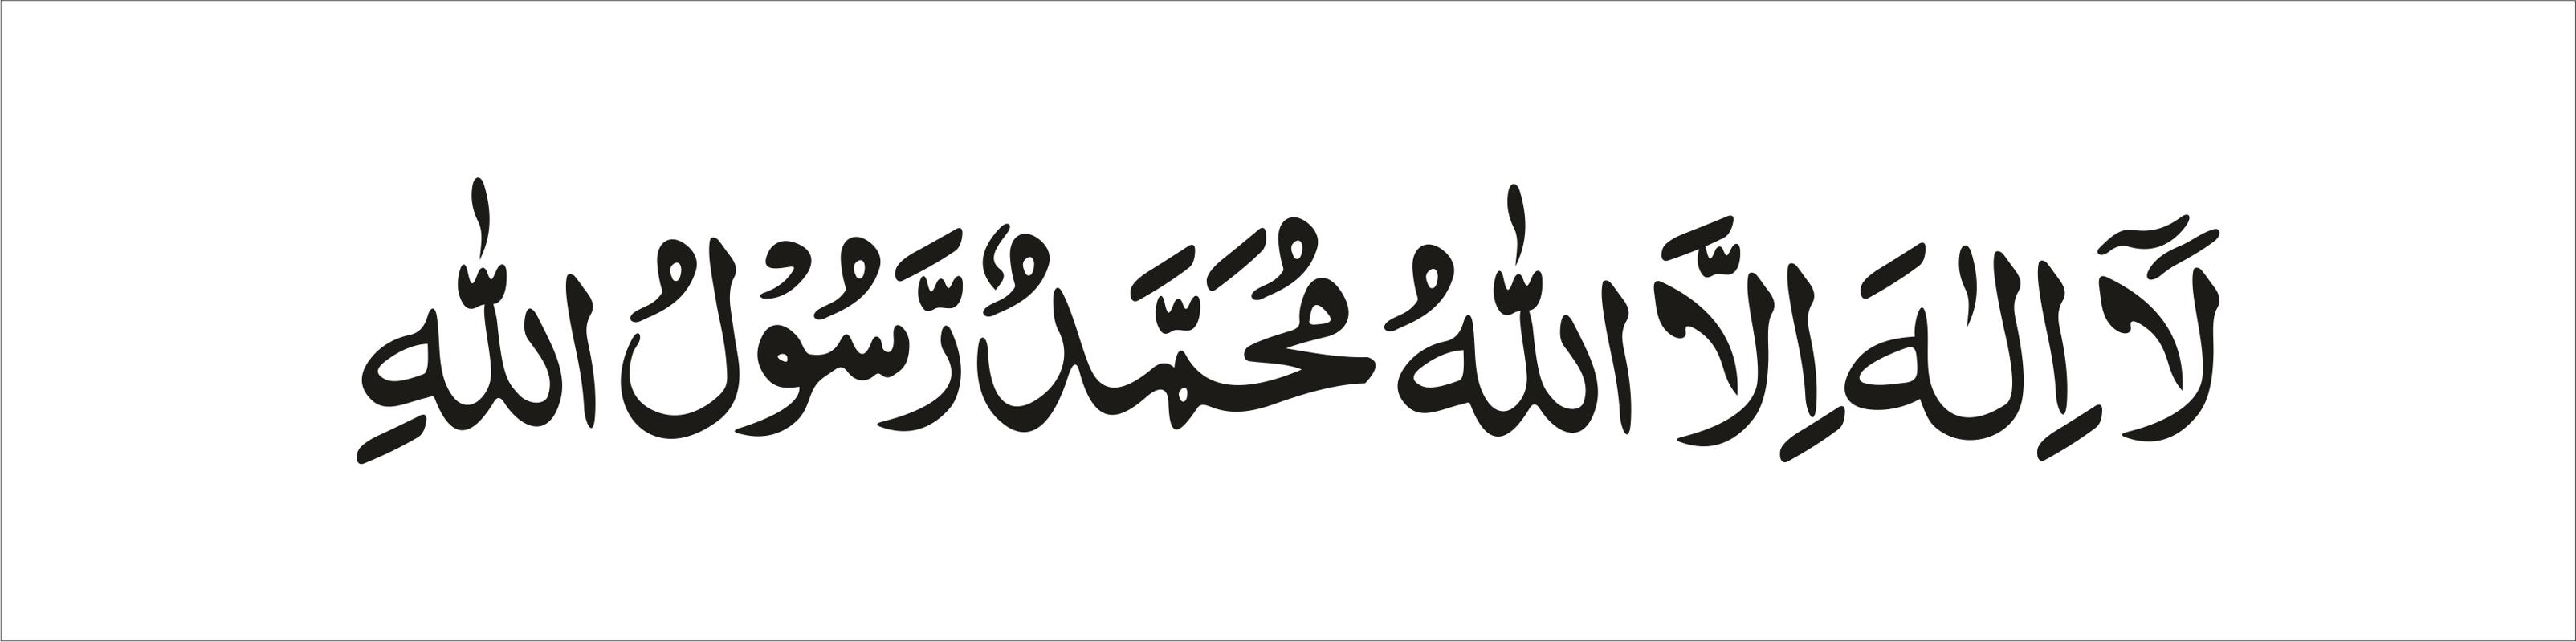 Primer vector de caligrafía islámica de Kalima Tayyab